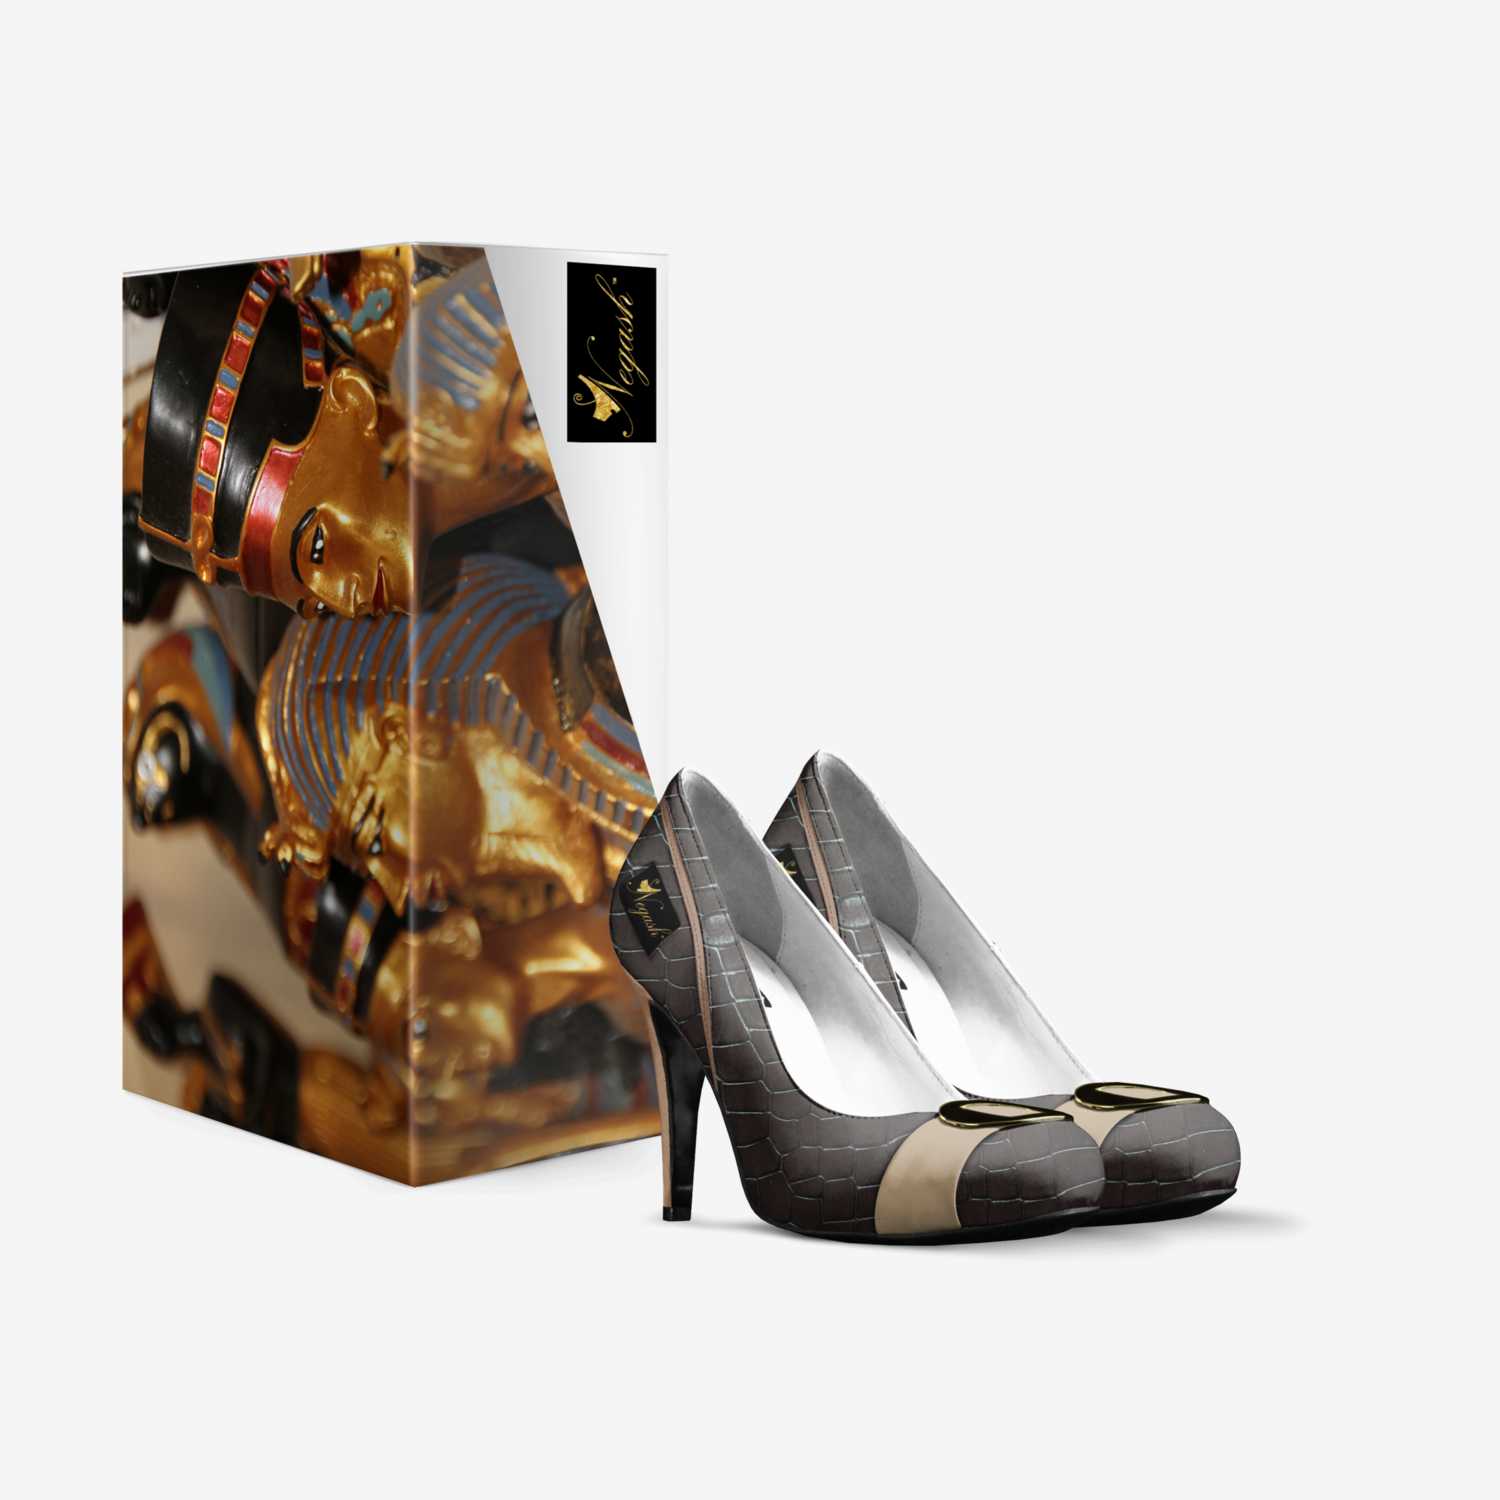 Negash Sobek Heels custom made in Italy shoes by Rocklin Negash | Box view